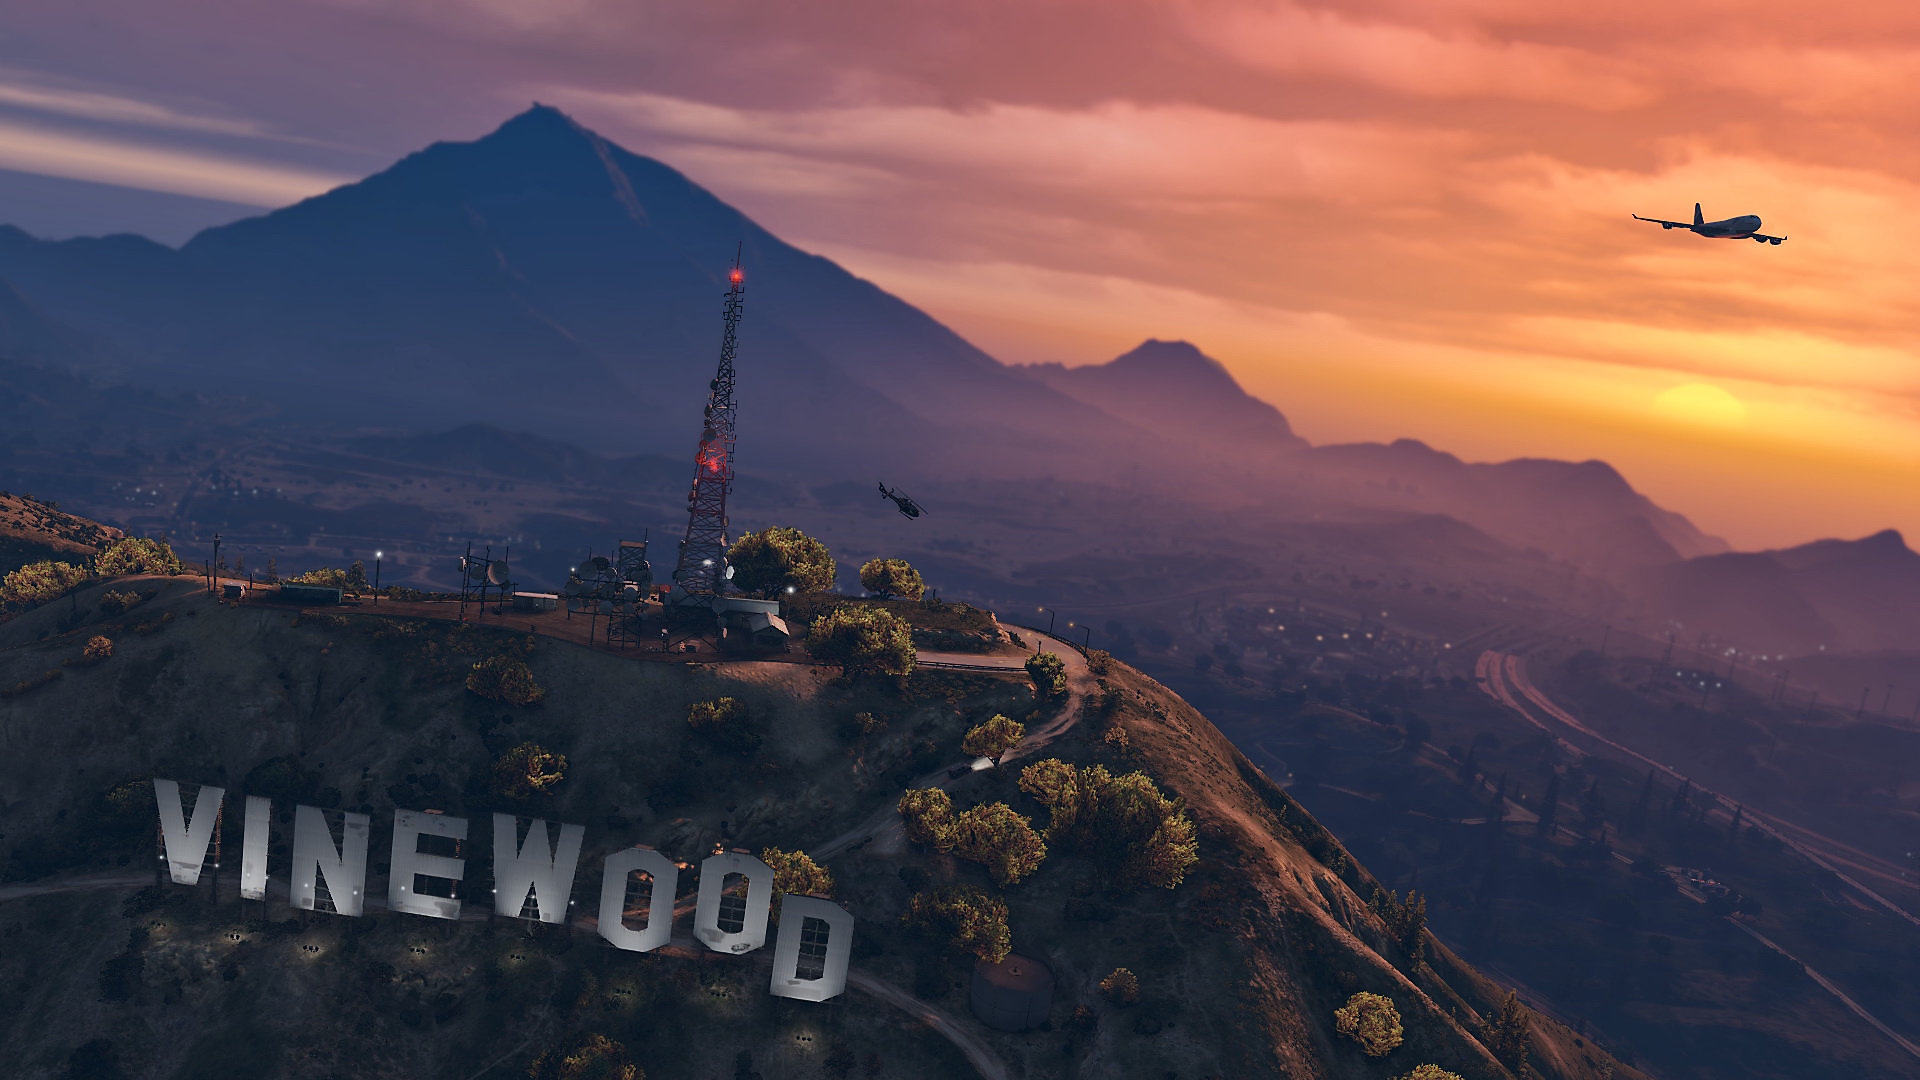 《Grand Theft Auto V》螢幕截圖，顯示掛有巨幅「Vinewood」字樣的山坡上的日落景觀